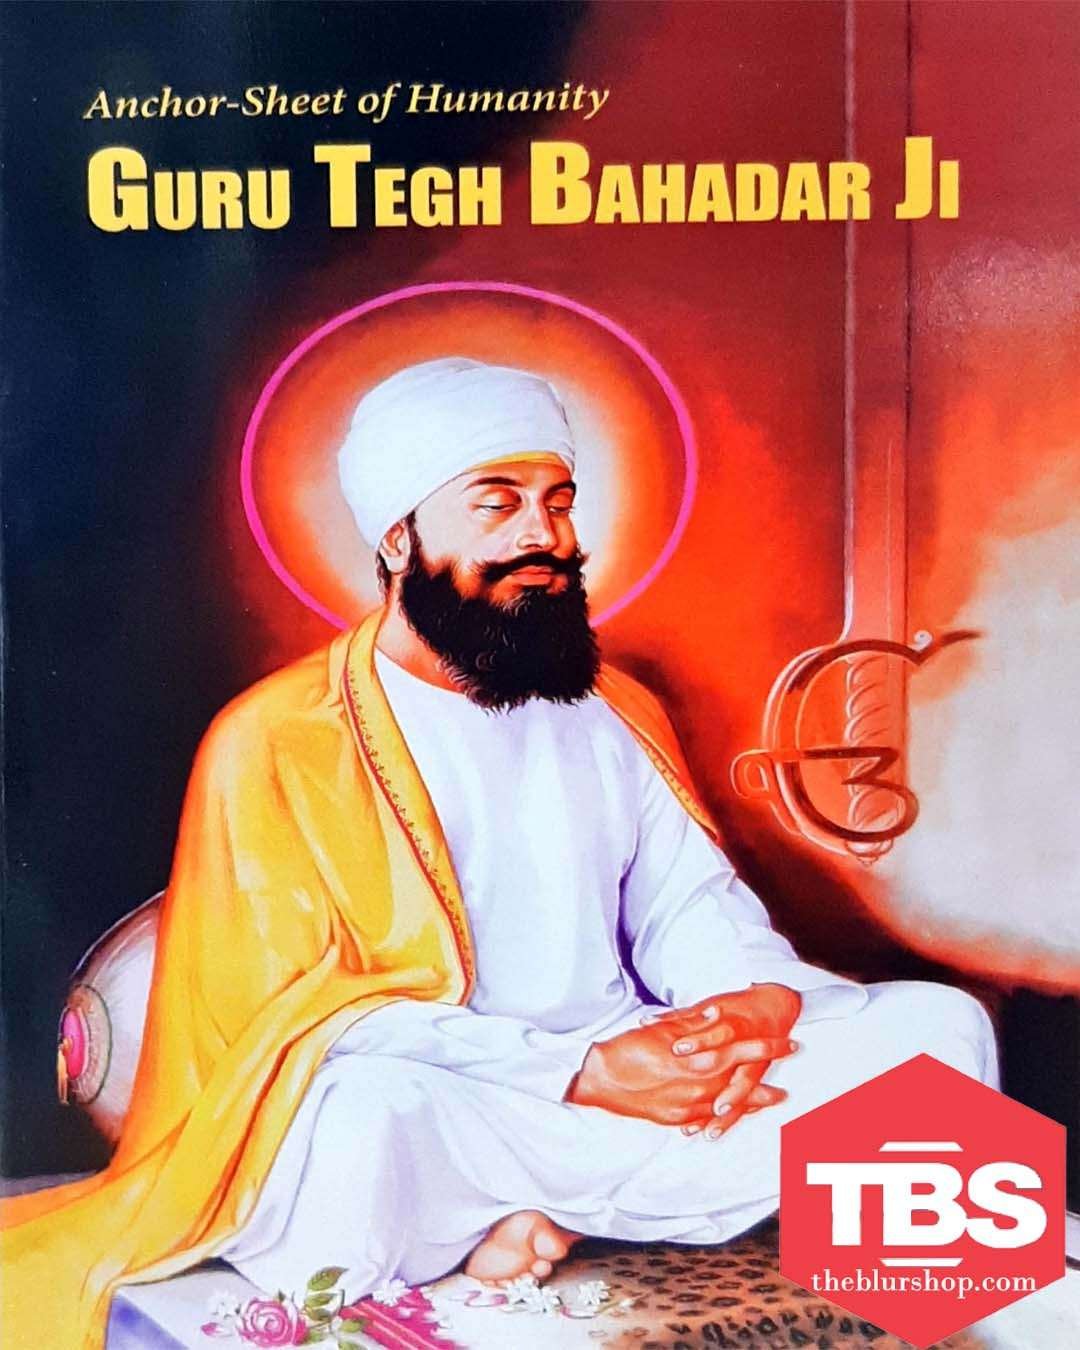 Anchor-Sheet of Humanity Guru Tegh Bahadar Ji